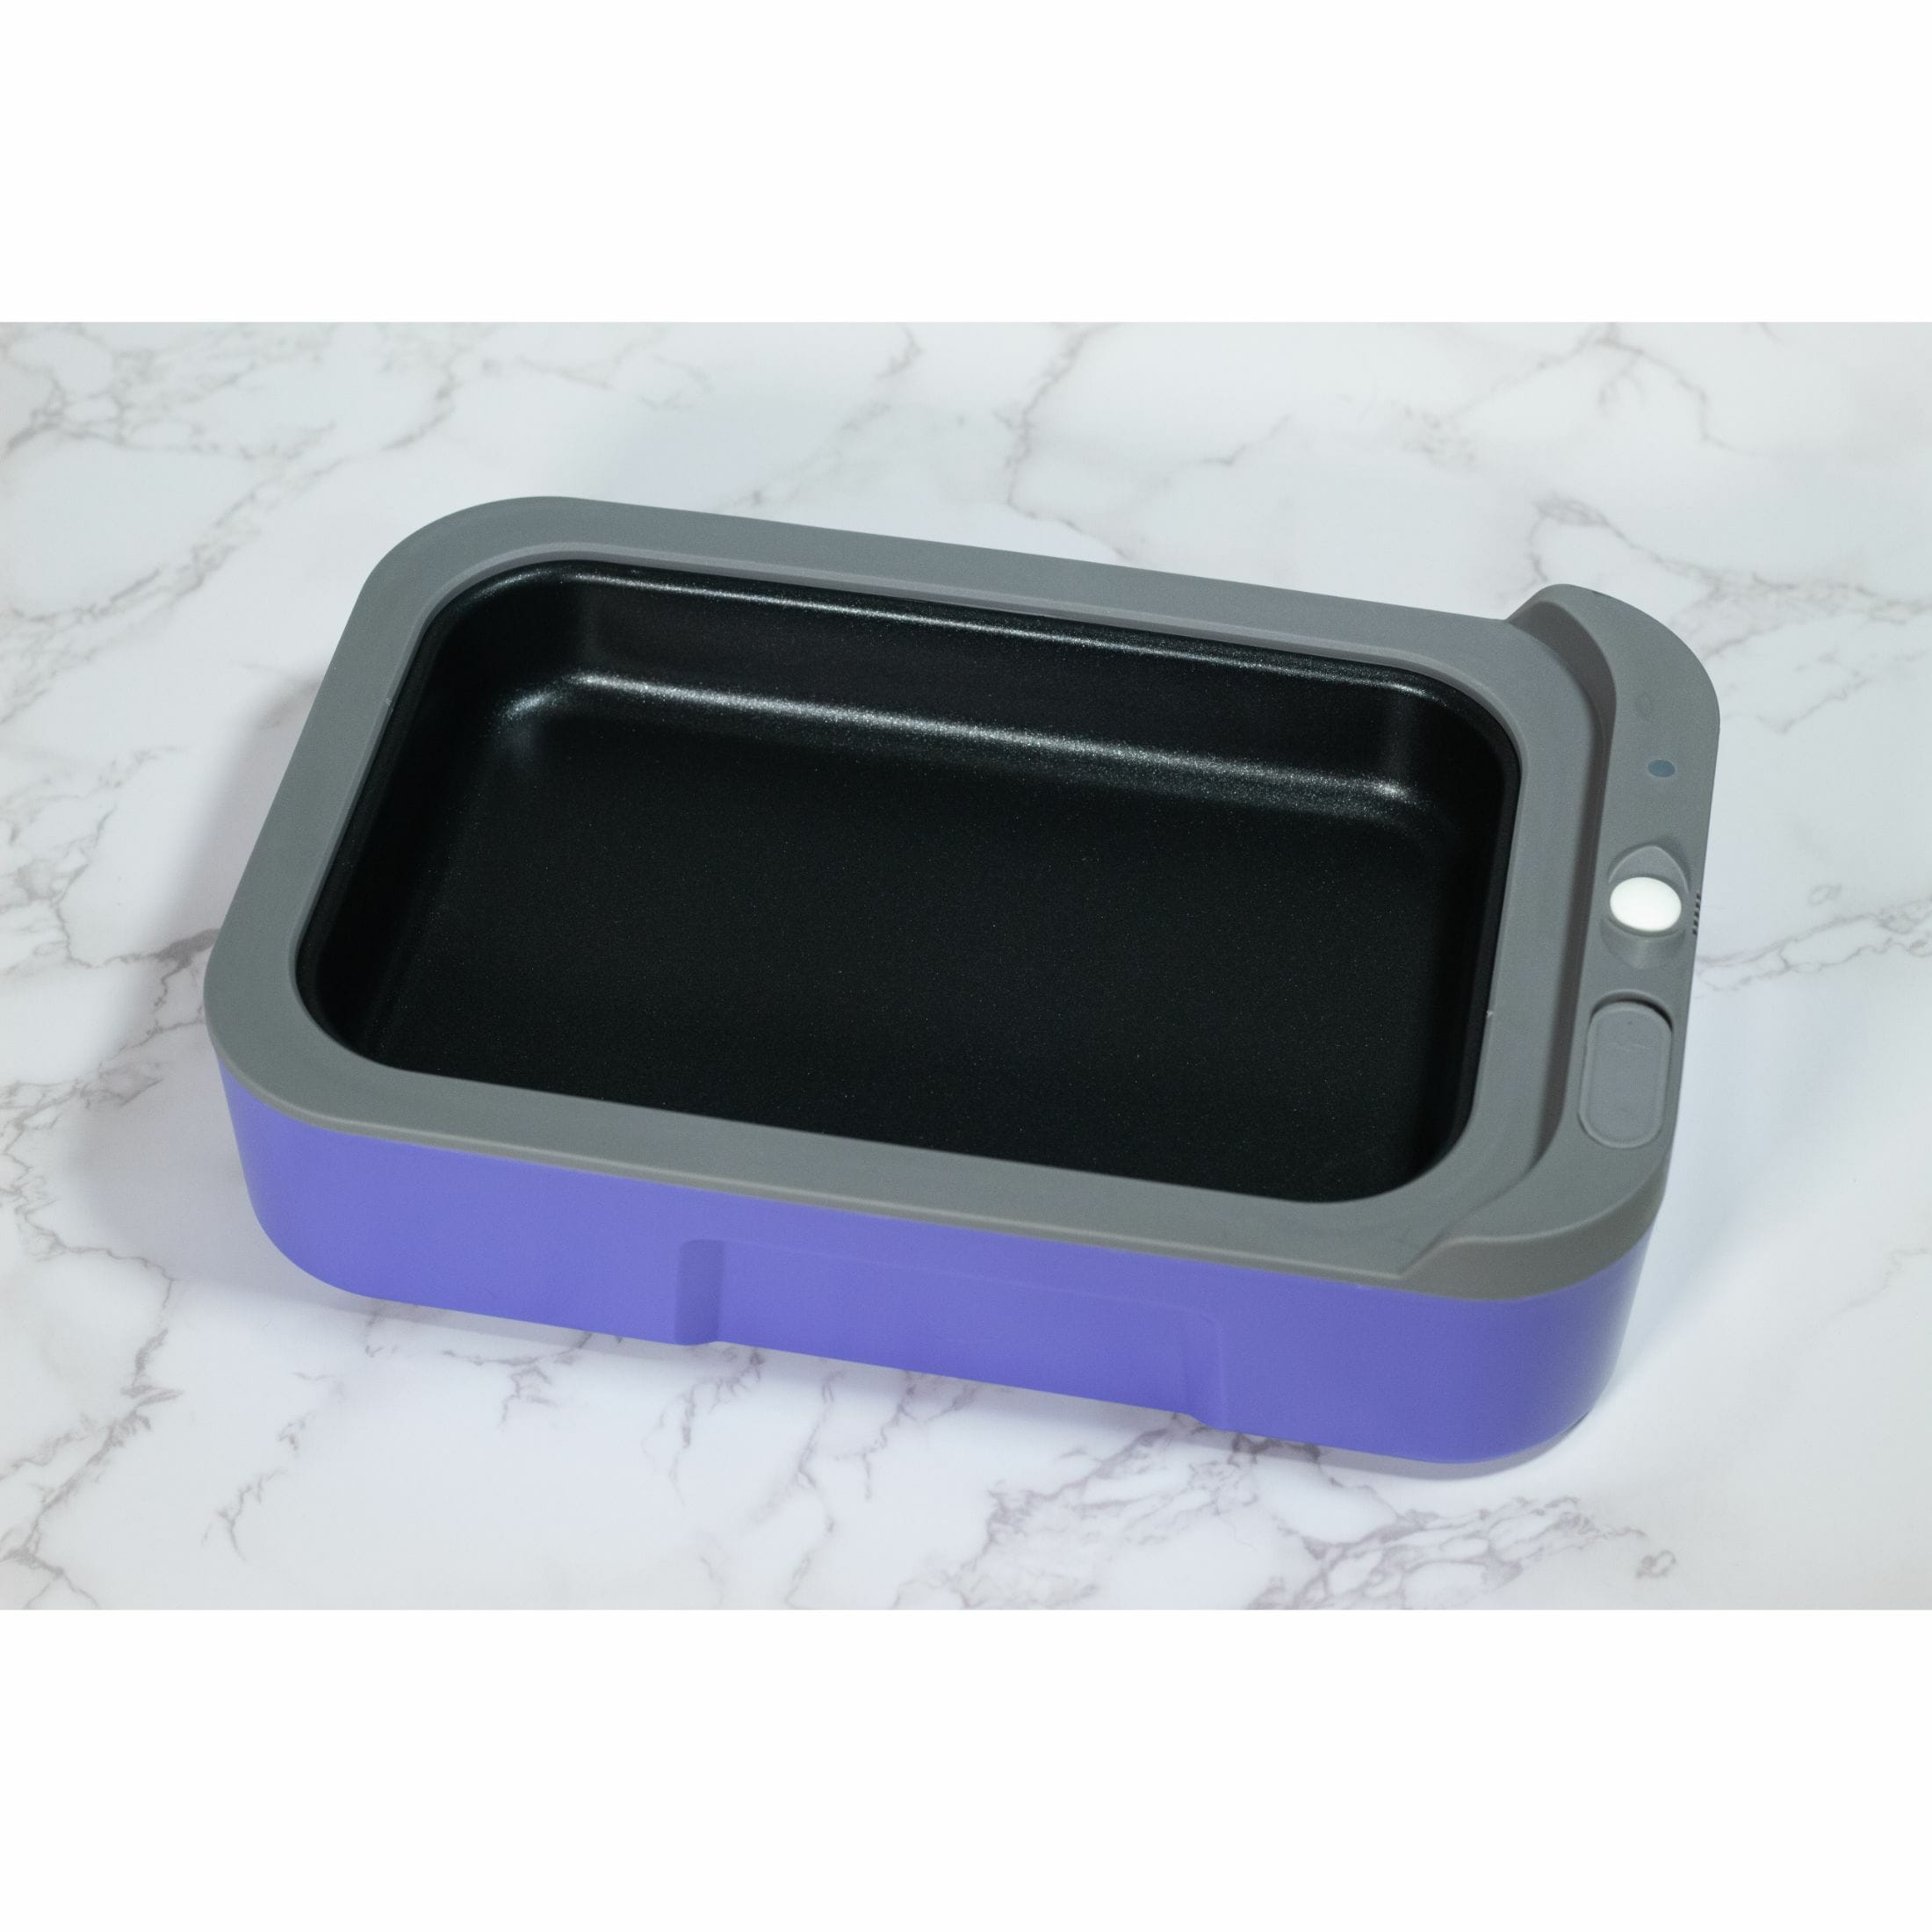 Hot Bento: 10-Minute Self-Heating Lunchbox 